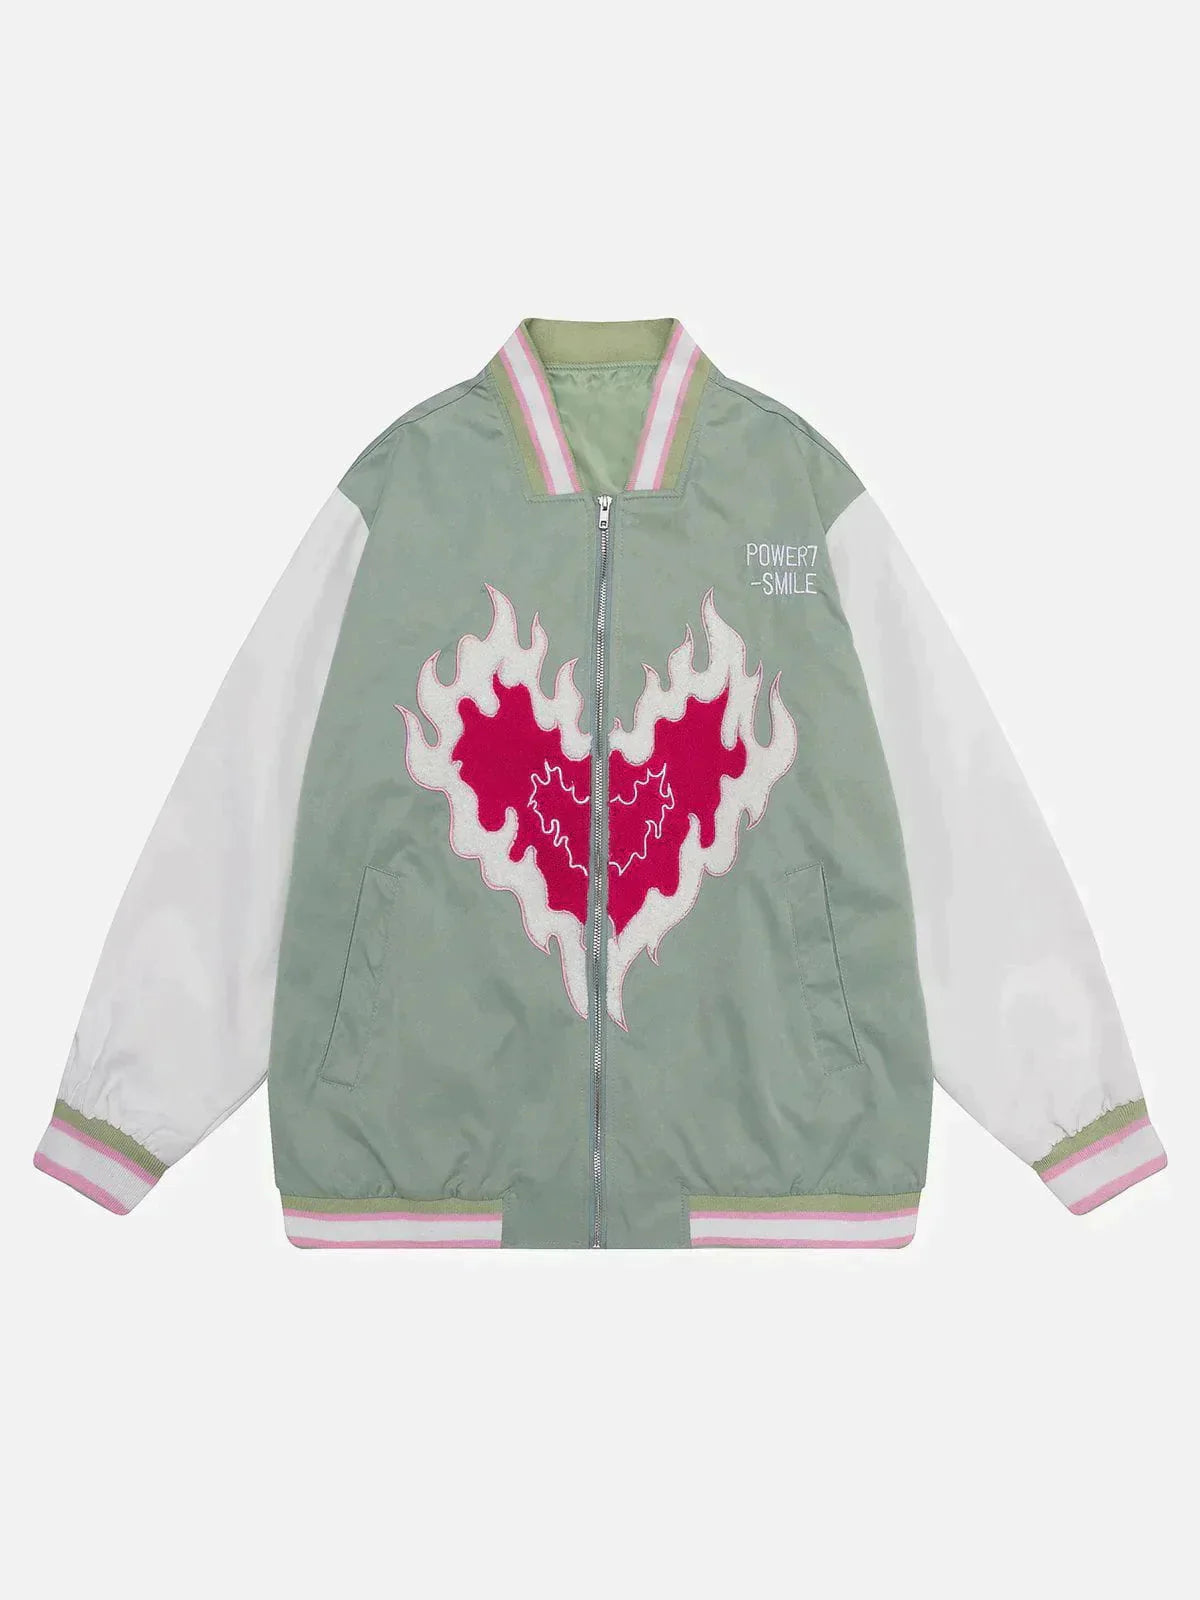 Eprezzy® - Fire Heart Embroidered Varsity Jacket Streetwear Fashion - eprezzy.com